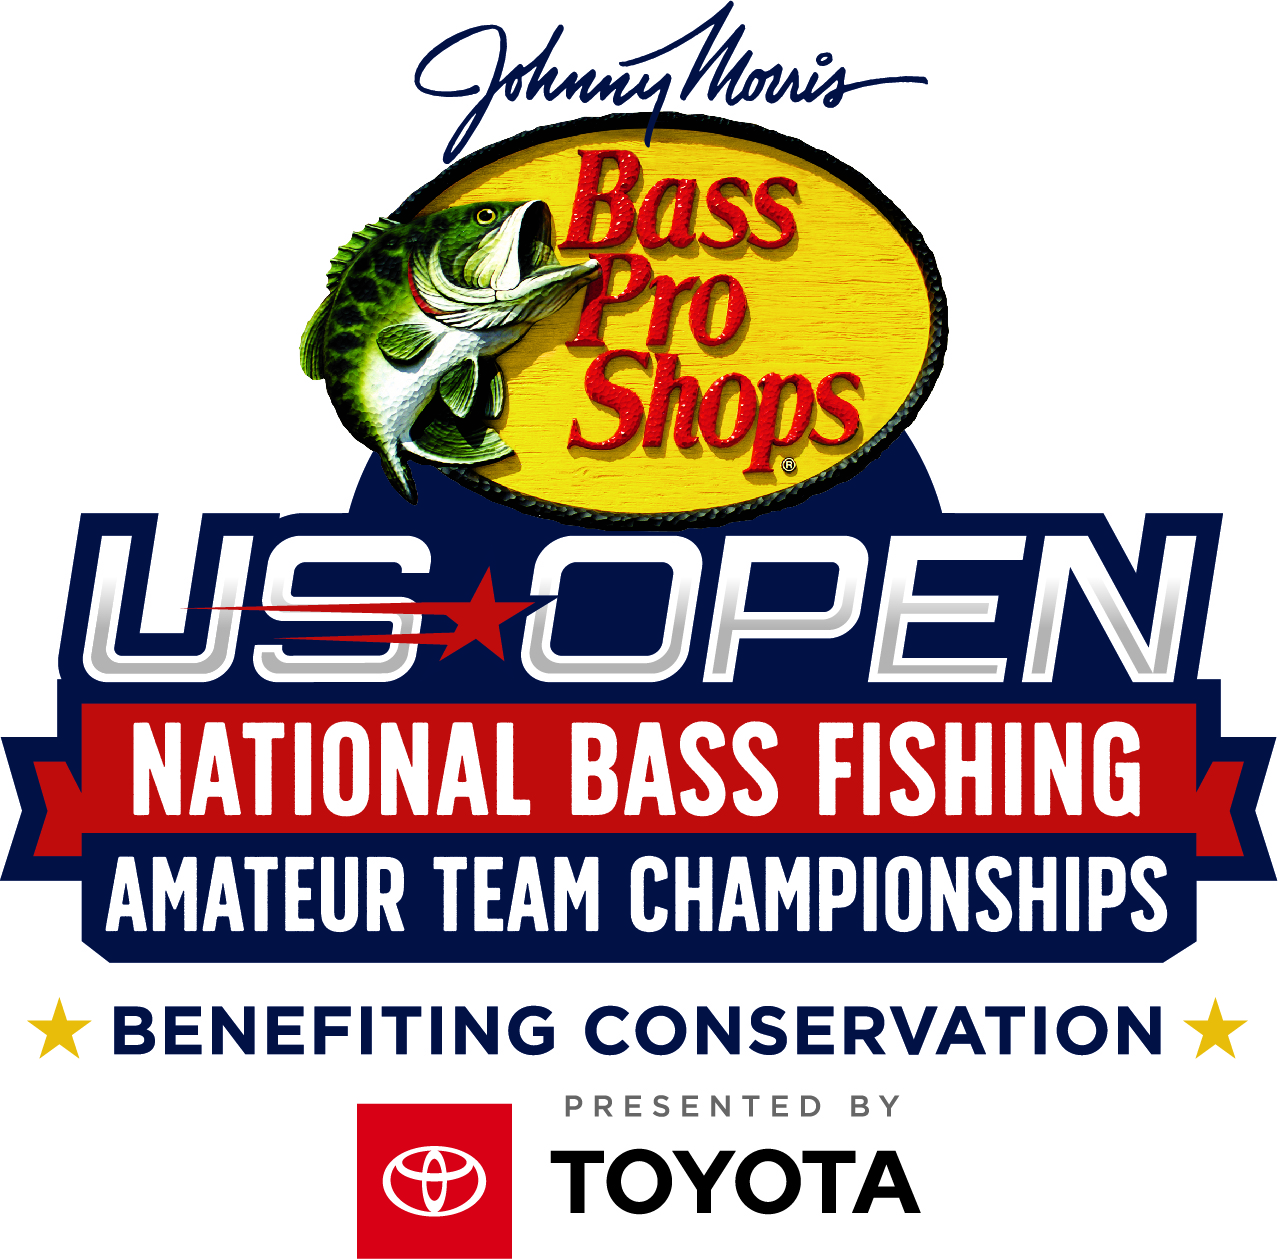 Bass Pro Shops/National Fish Habitat Partnership U.S. Open Grant Program Funds Nine Projects in 2022